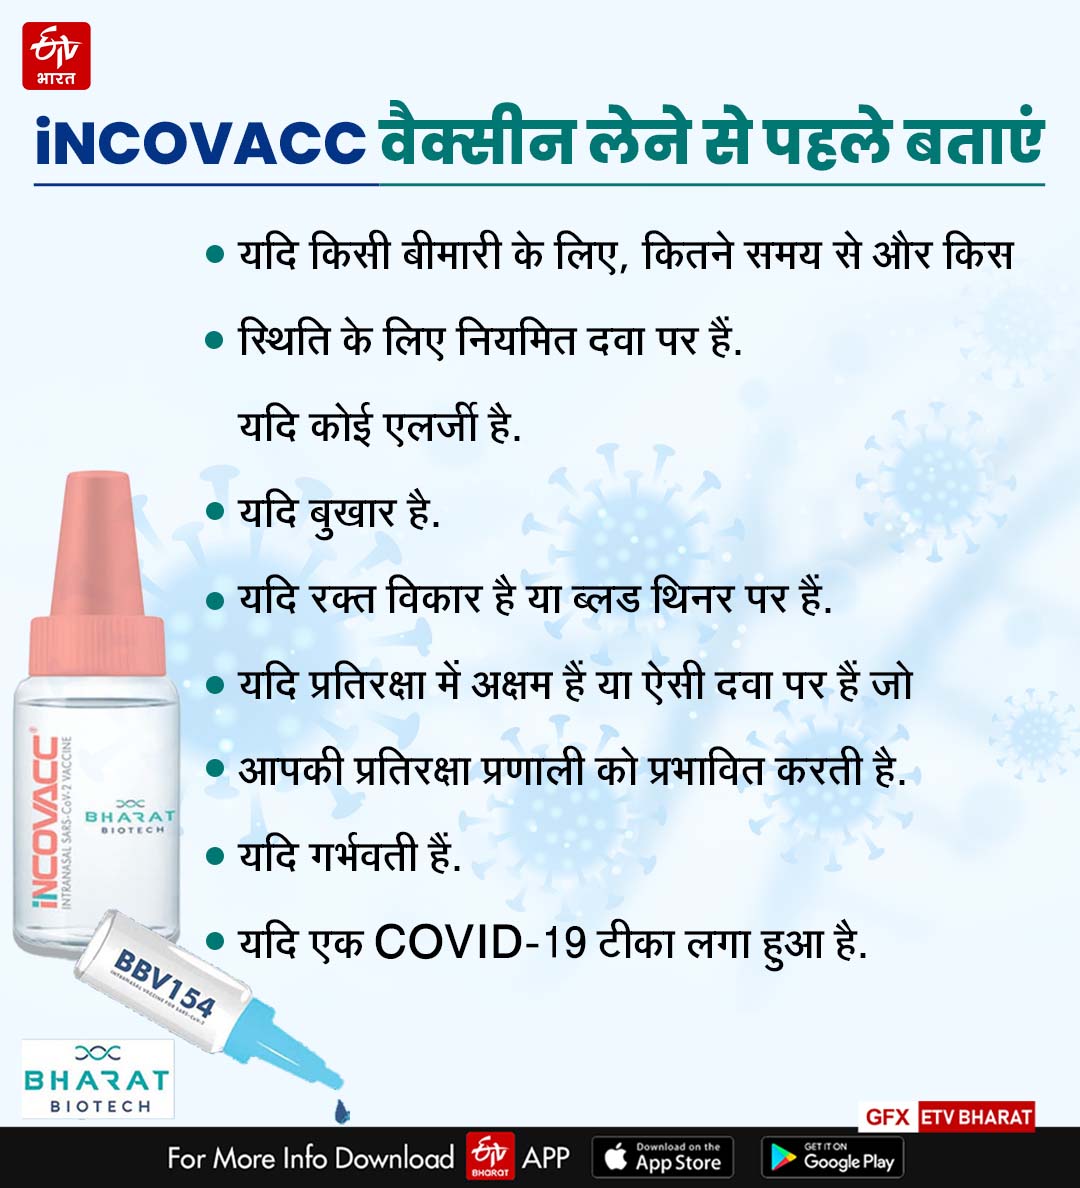 intranasal Covid vaccine by Bharat Biotech nasal vaccine